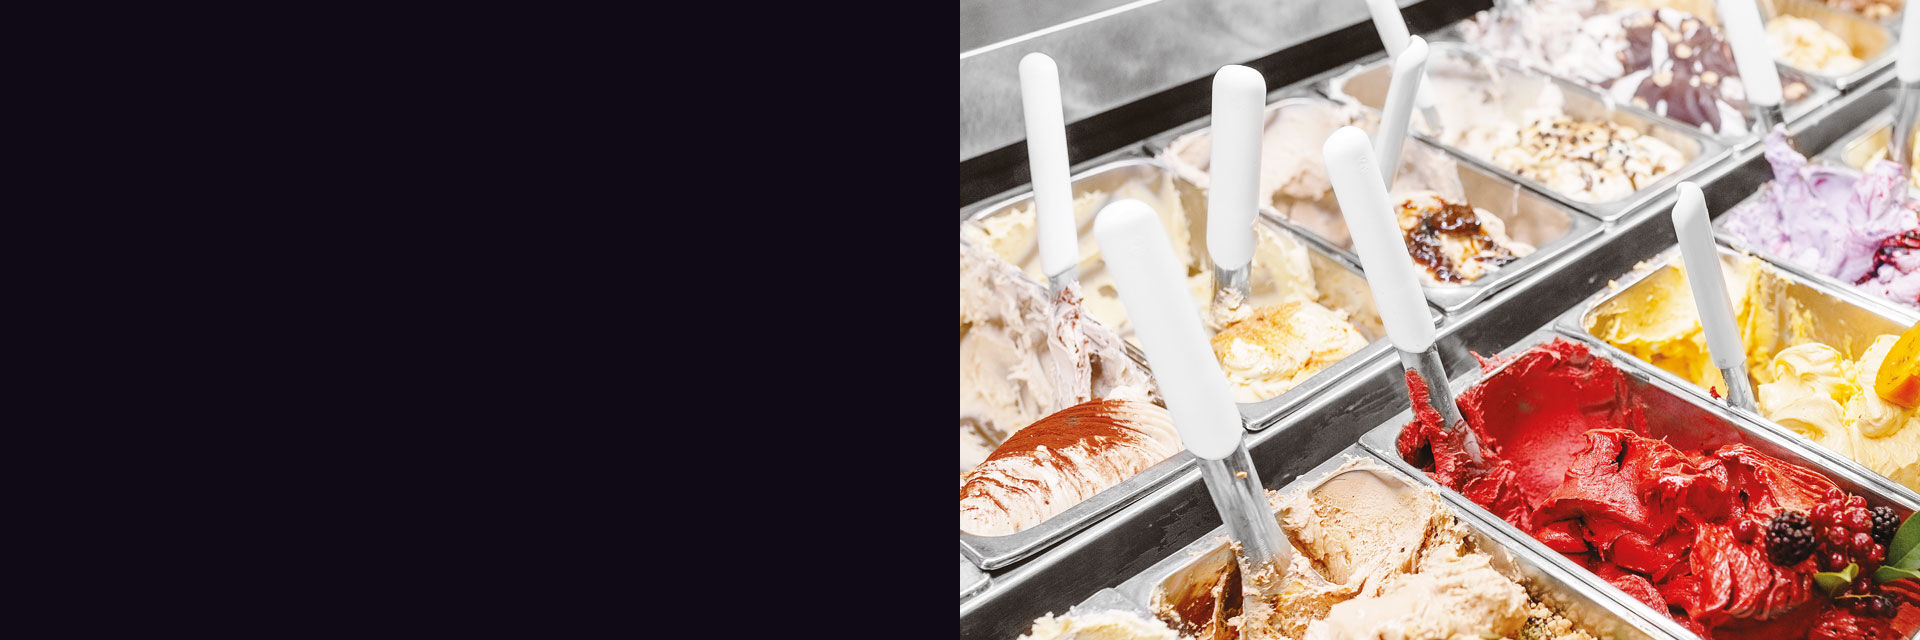 Ice cream spatulas